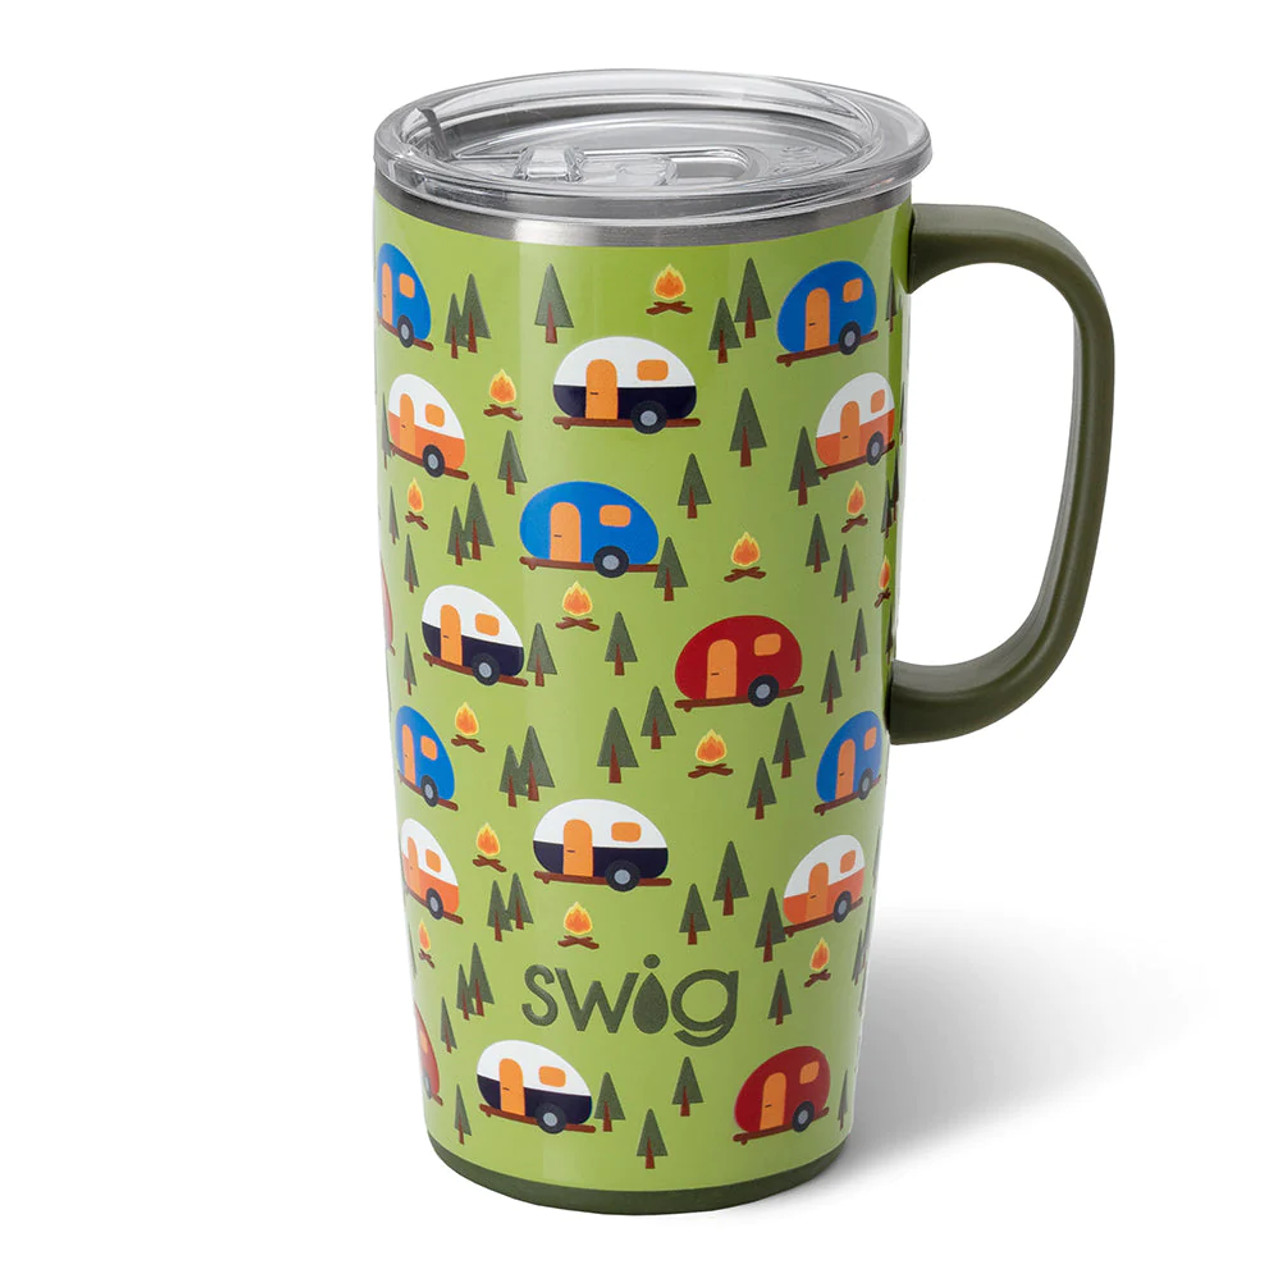 Swig　Life　Happy　Mug　Camper　Travel　(22oz)　Craig　Reagin　Clothiers